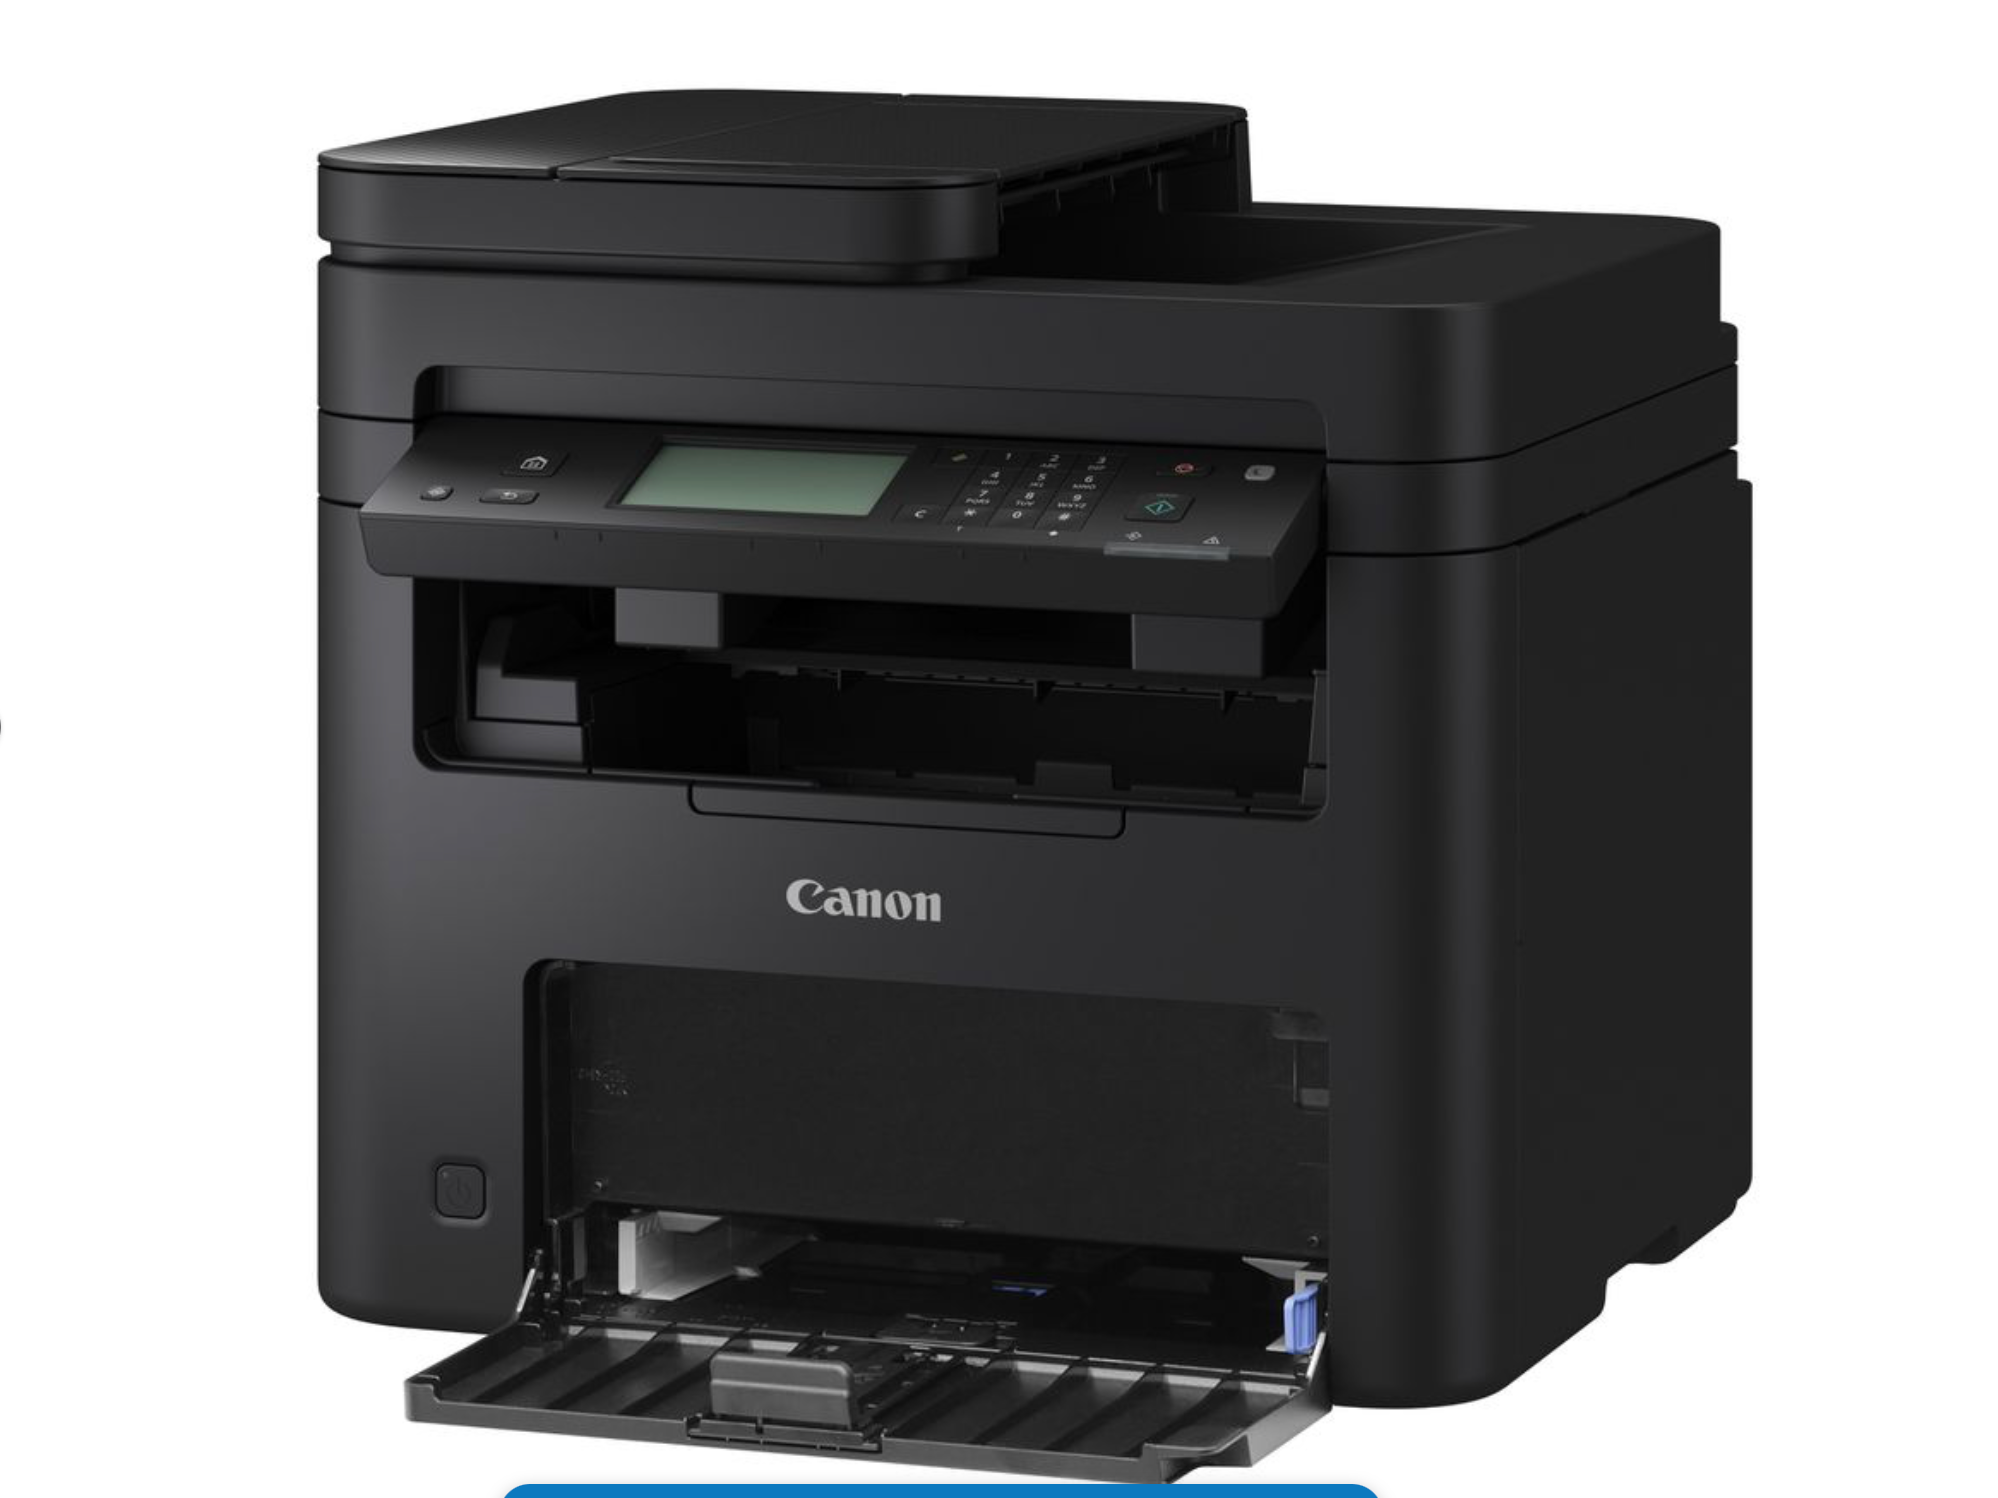 Canon i-SENSYS MF275dw All-In-One Wireless Mono Laser Printer